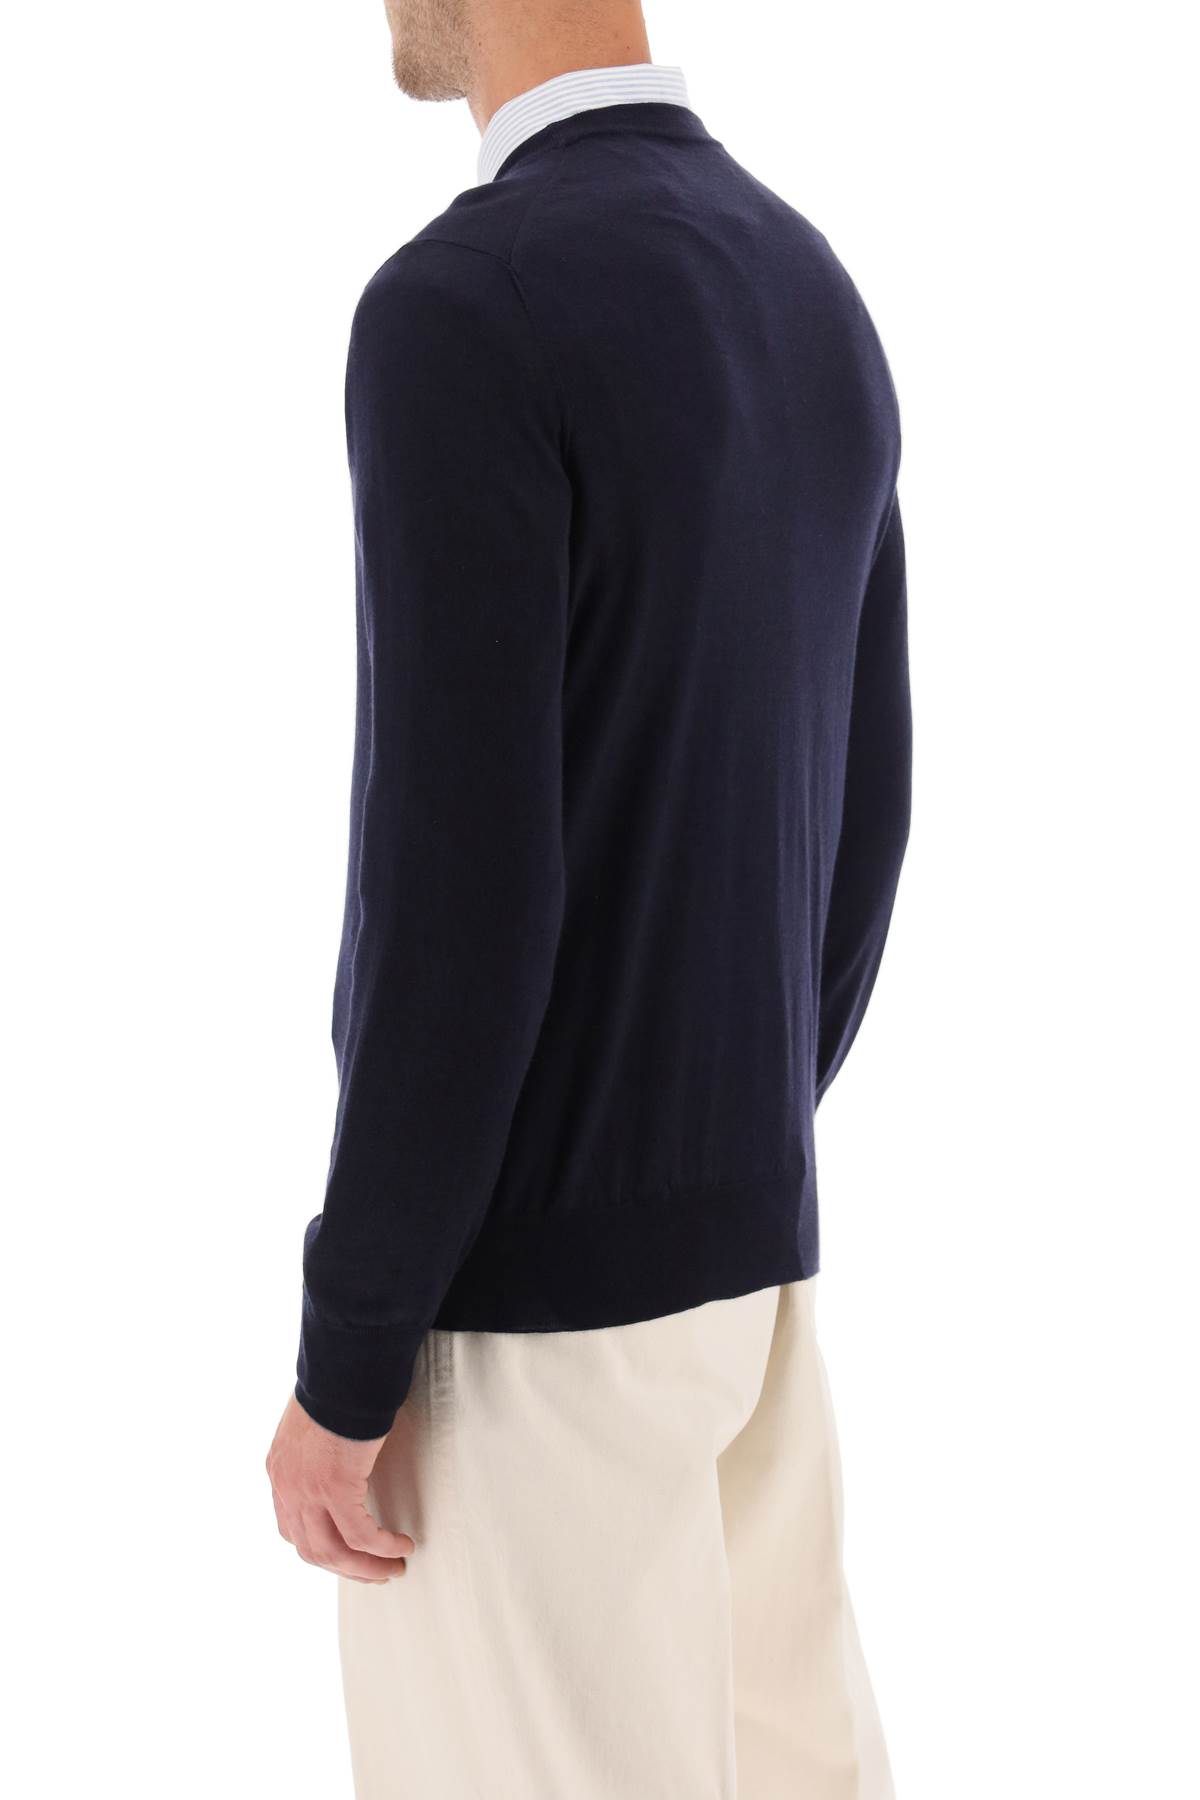 Shop Brunello Cucinelli Cashmere Sweater In Navy+grigio Scuro